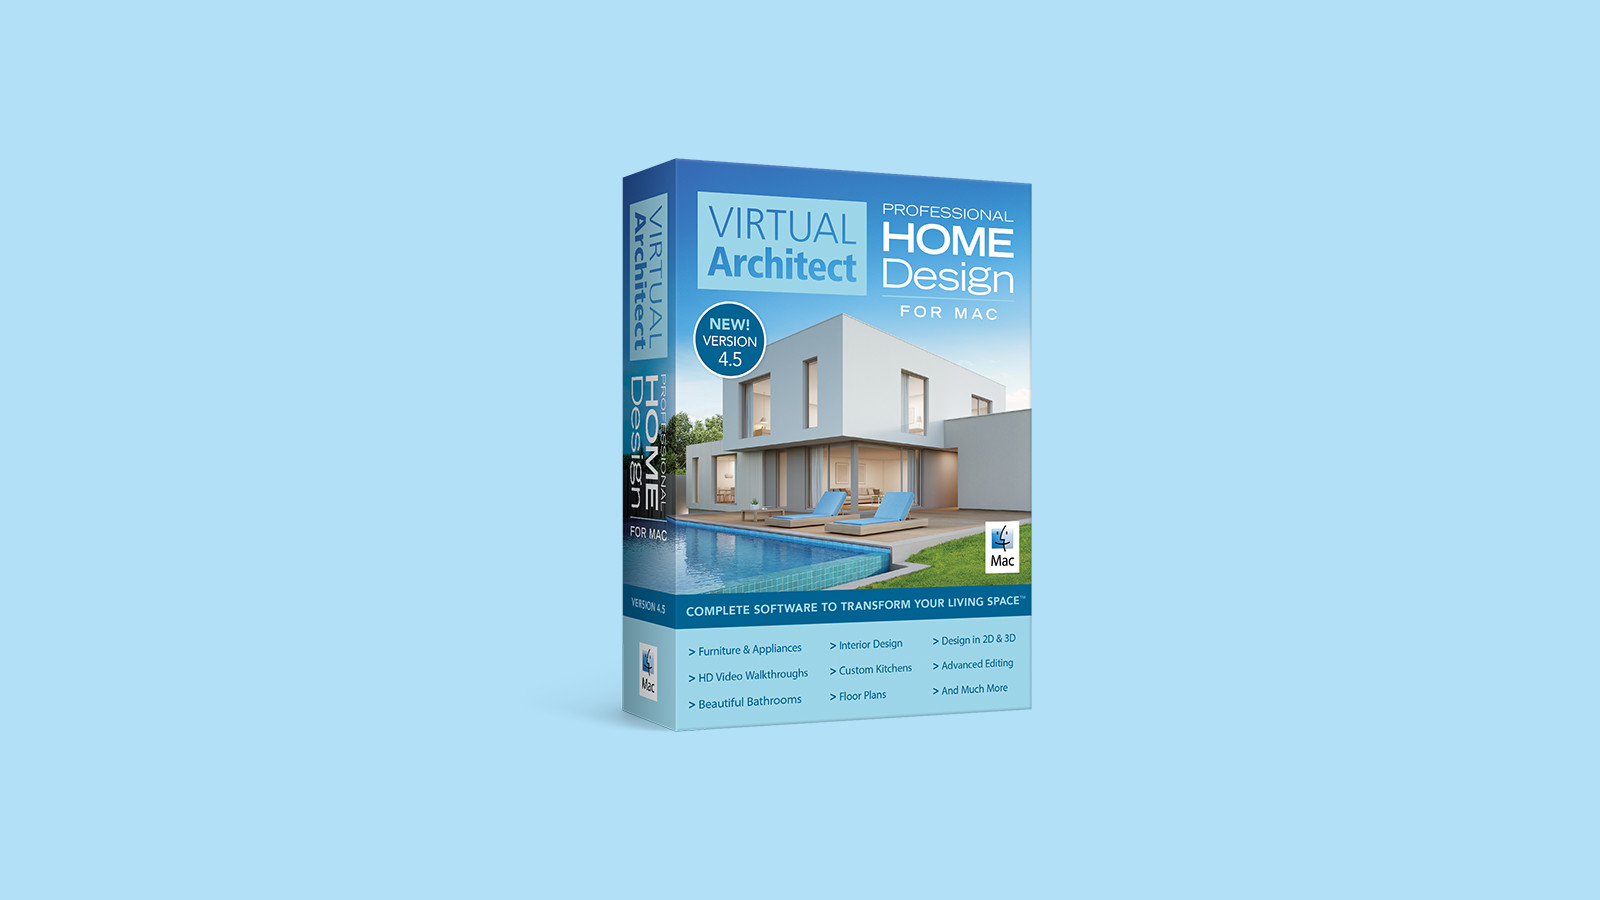 Virtual Architect Professional Home Design for Mac CD Key 64.8 $